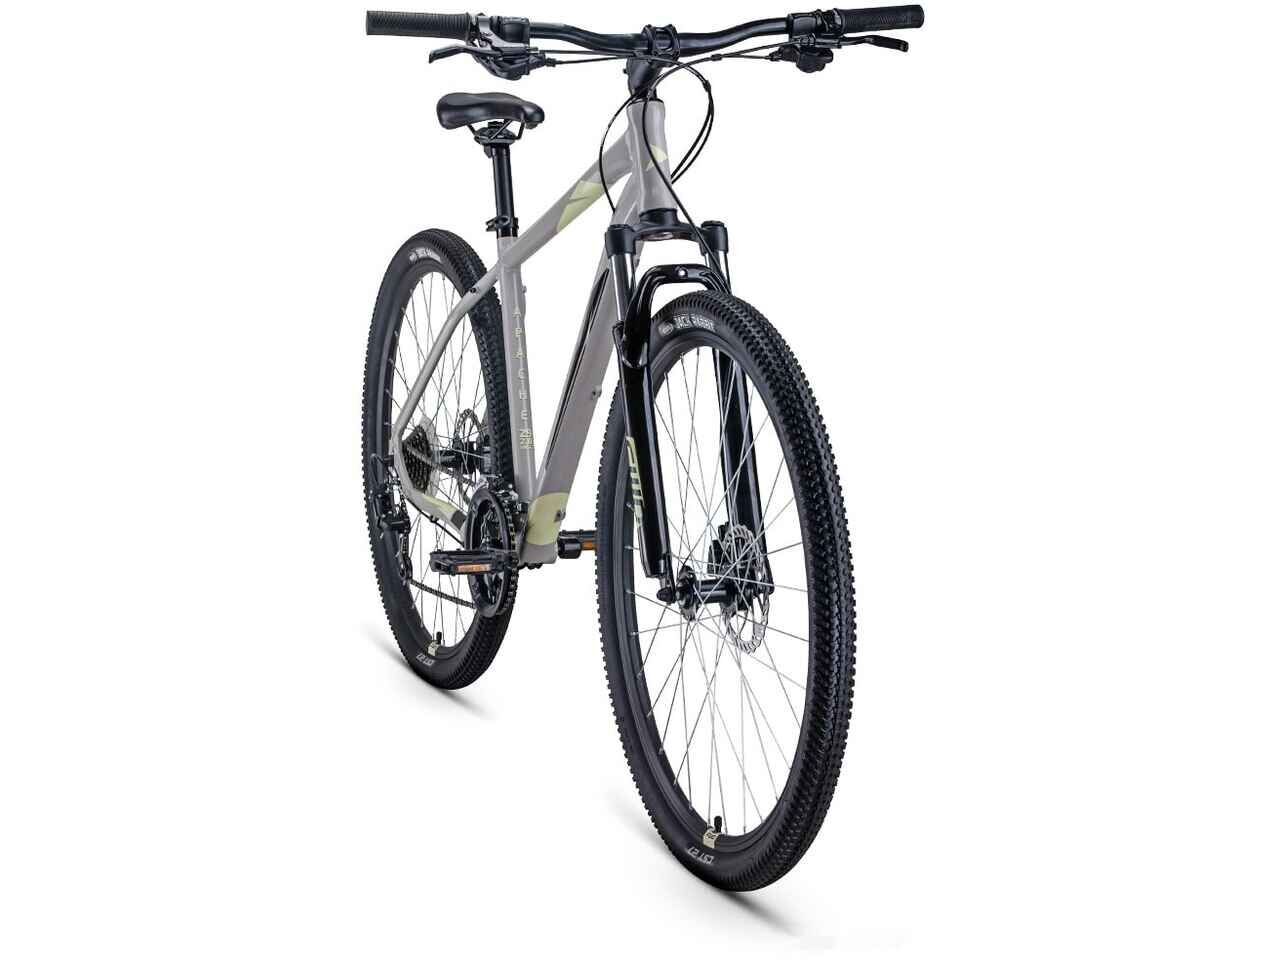 Велосипед Forward Apache 29 2.0 disc р.19 2021 (серый)